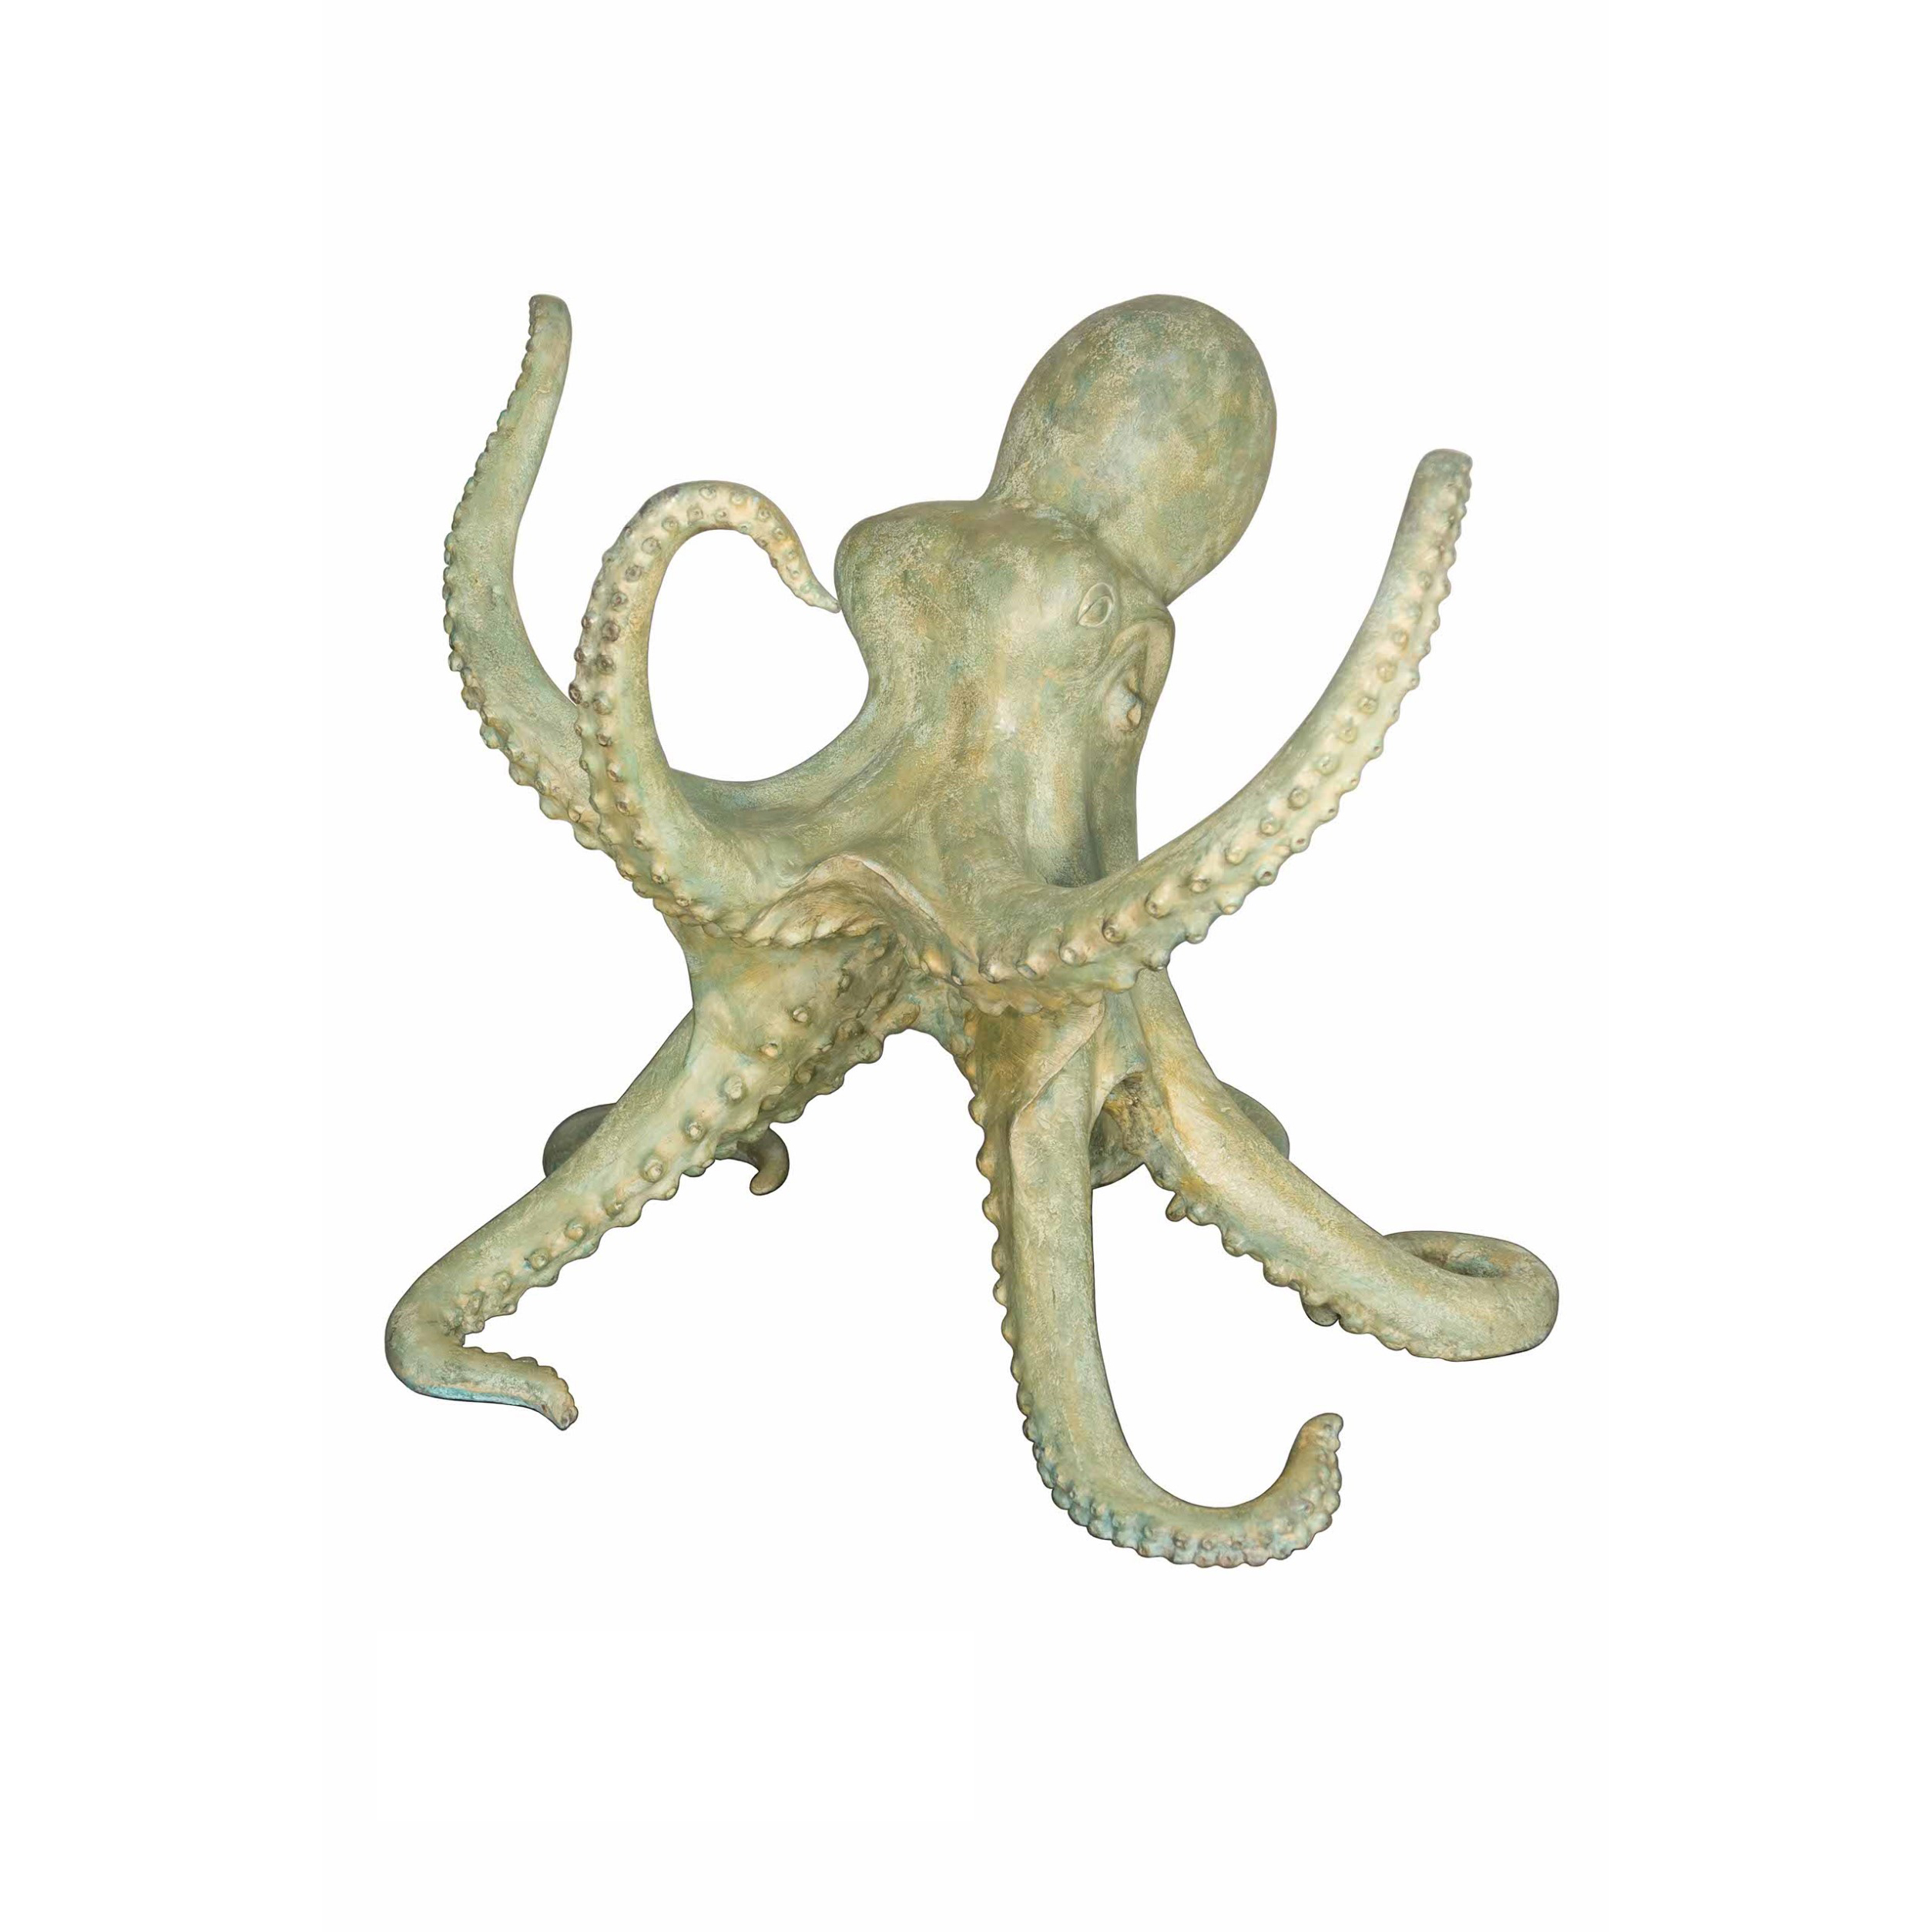 Color Patina Bronze Verdigris Octopus Table Base Sculpture Metropolitan Galleries Inc.